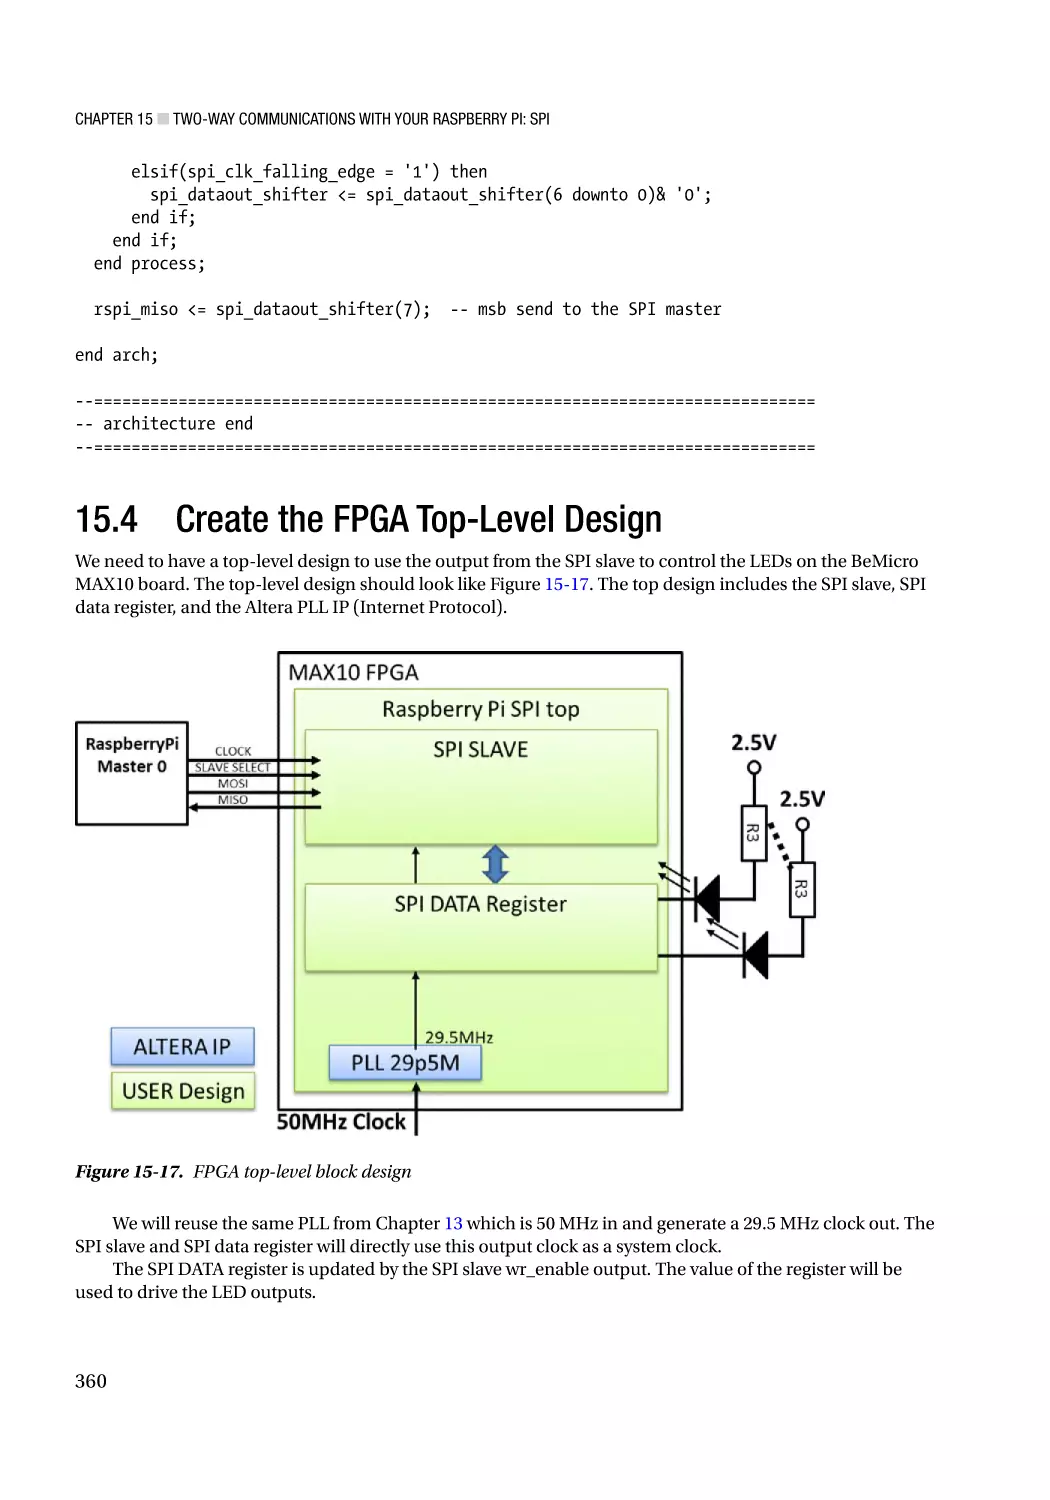 15.4 Create the FPGA Top-Level Design